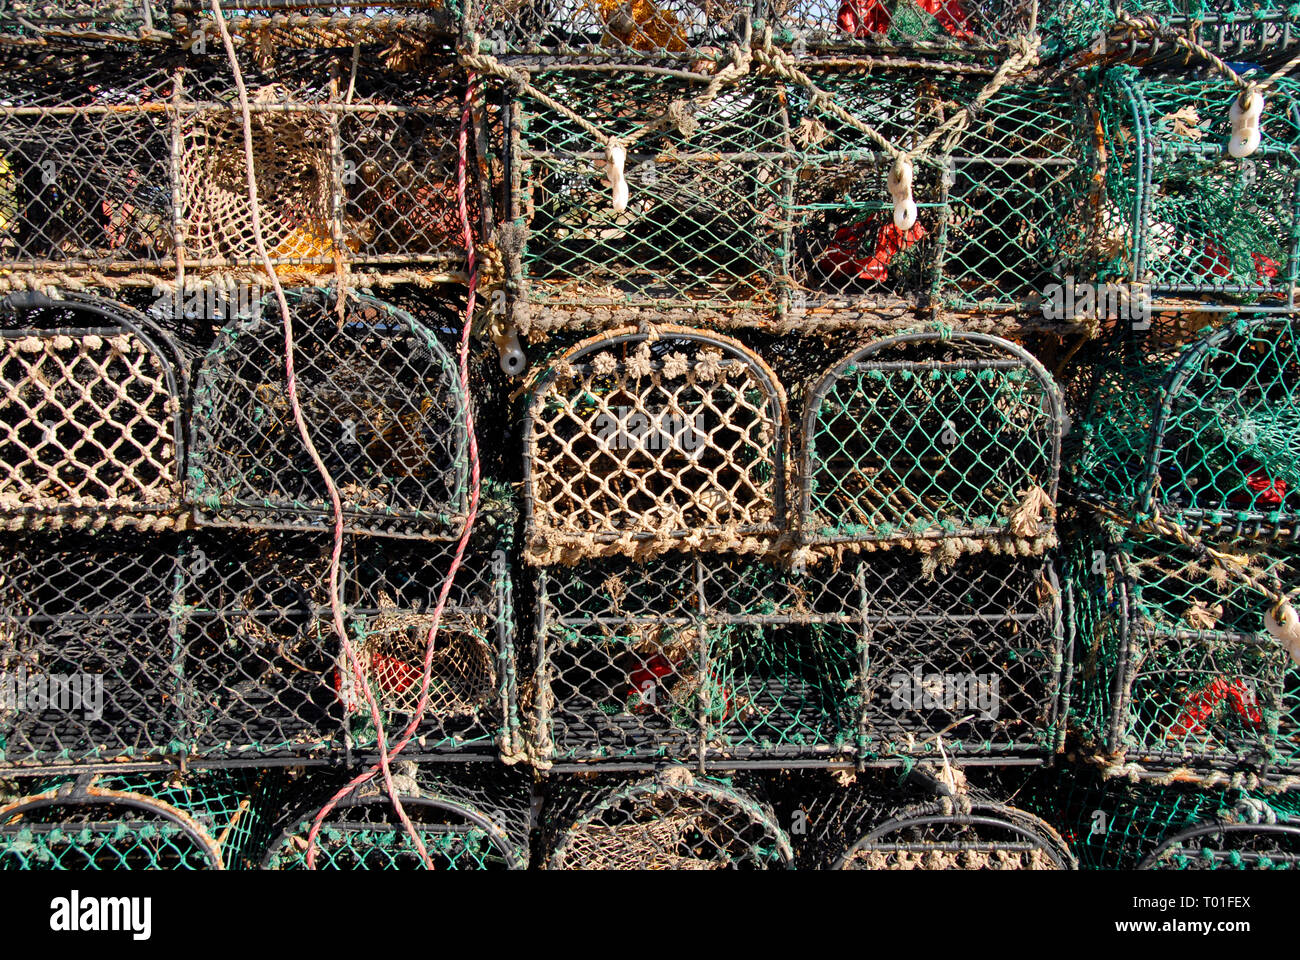 Fishermens's traps stacked, Brancaster Staithe, Norfolk,England Stock Photo